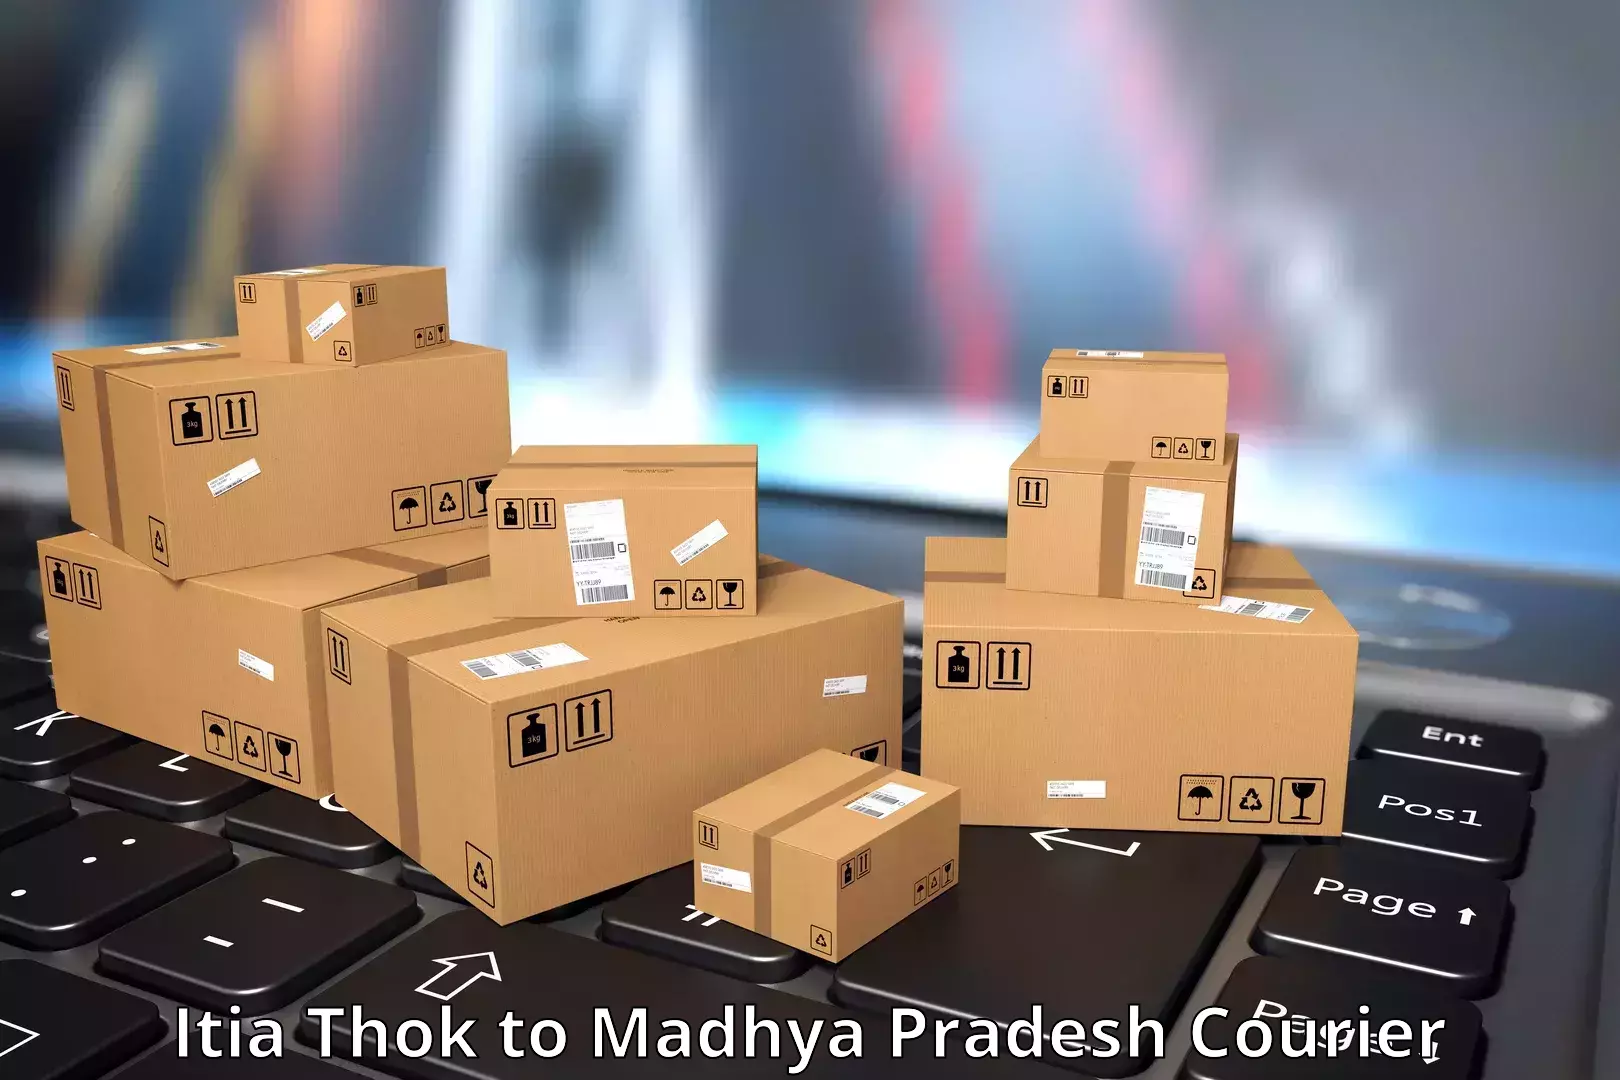 High-capacity courier solutions Itia Thok to Nalkheda